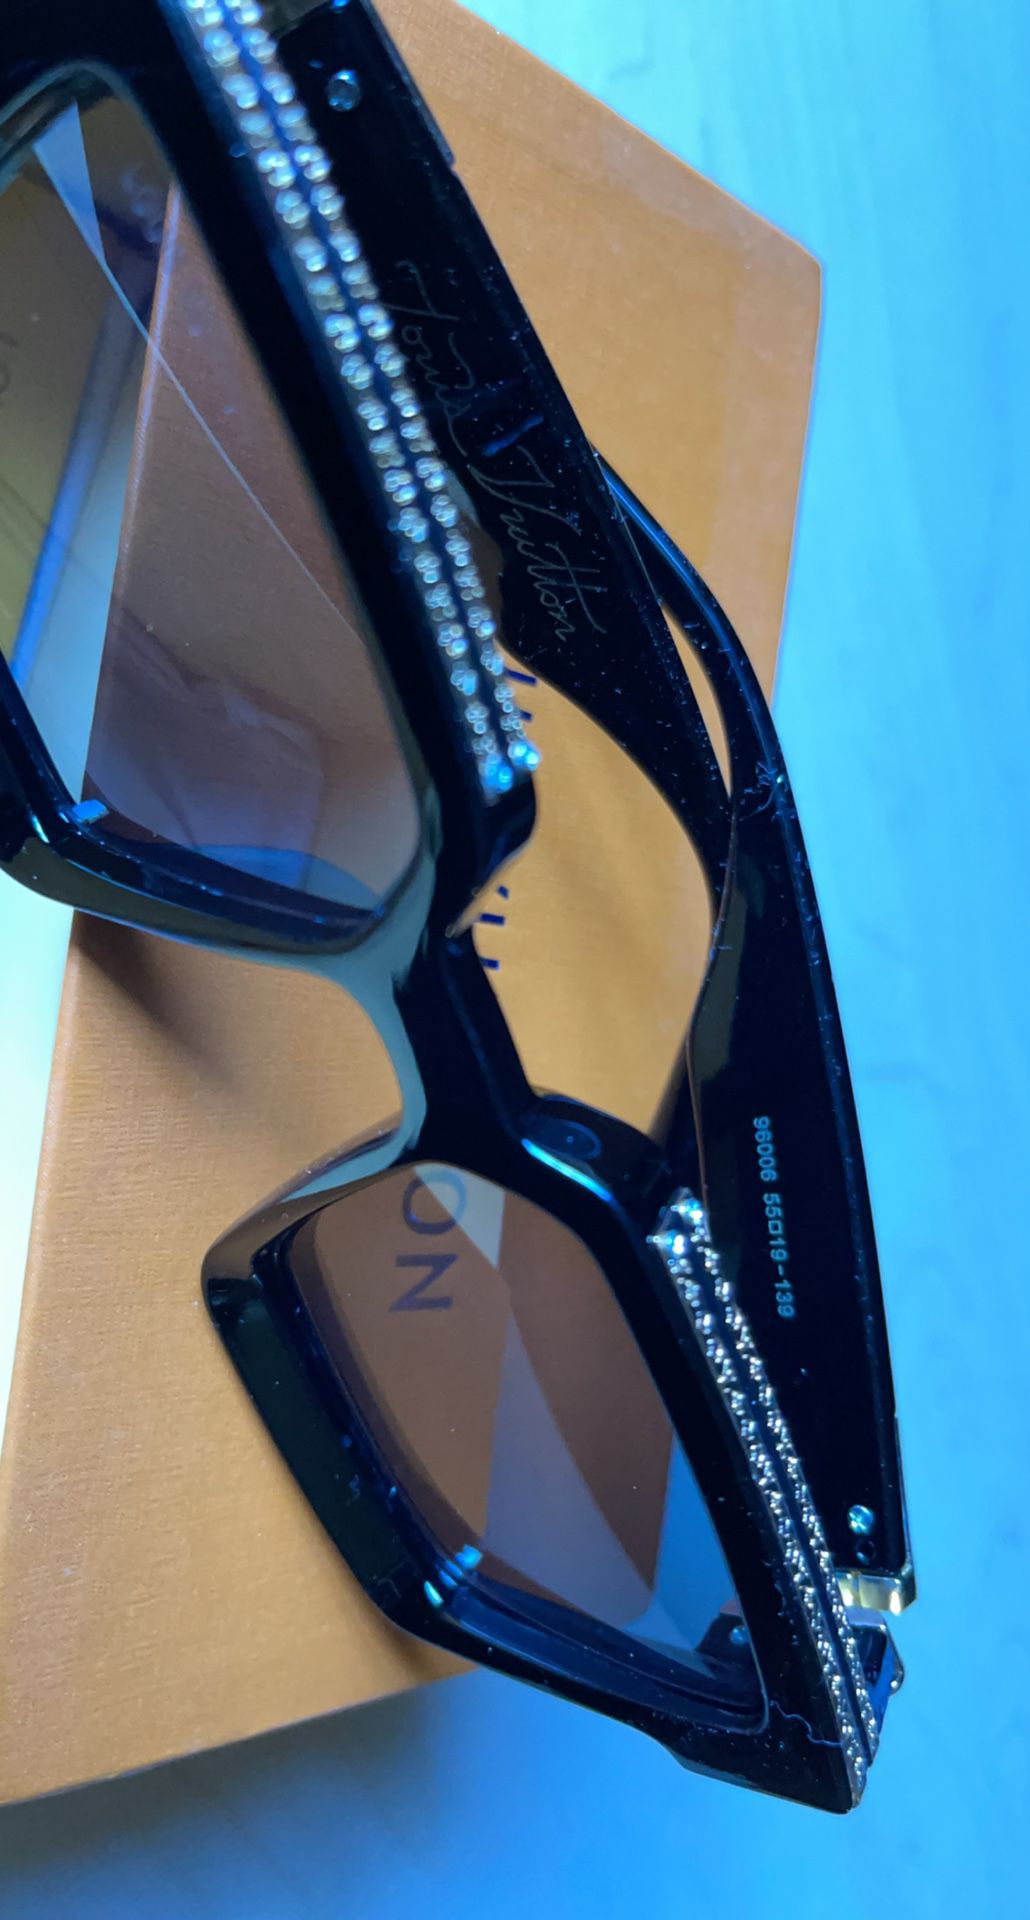 LV Unisex Sunglasses for Sale in Sanford, FL - OfferUp